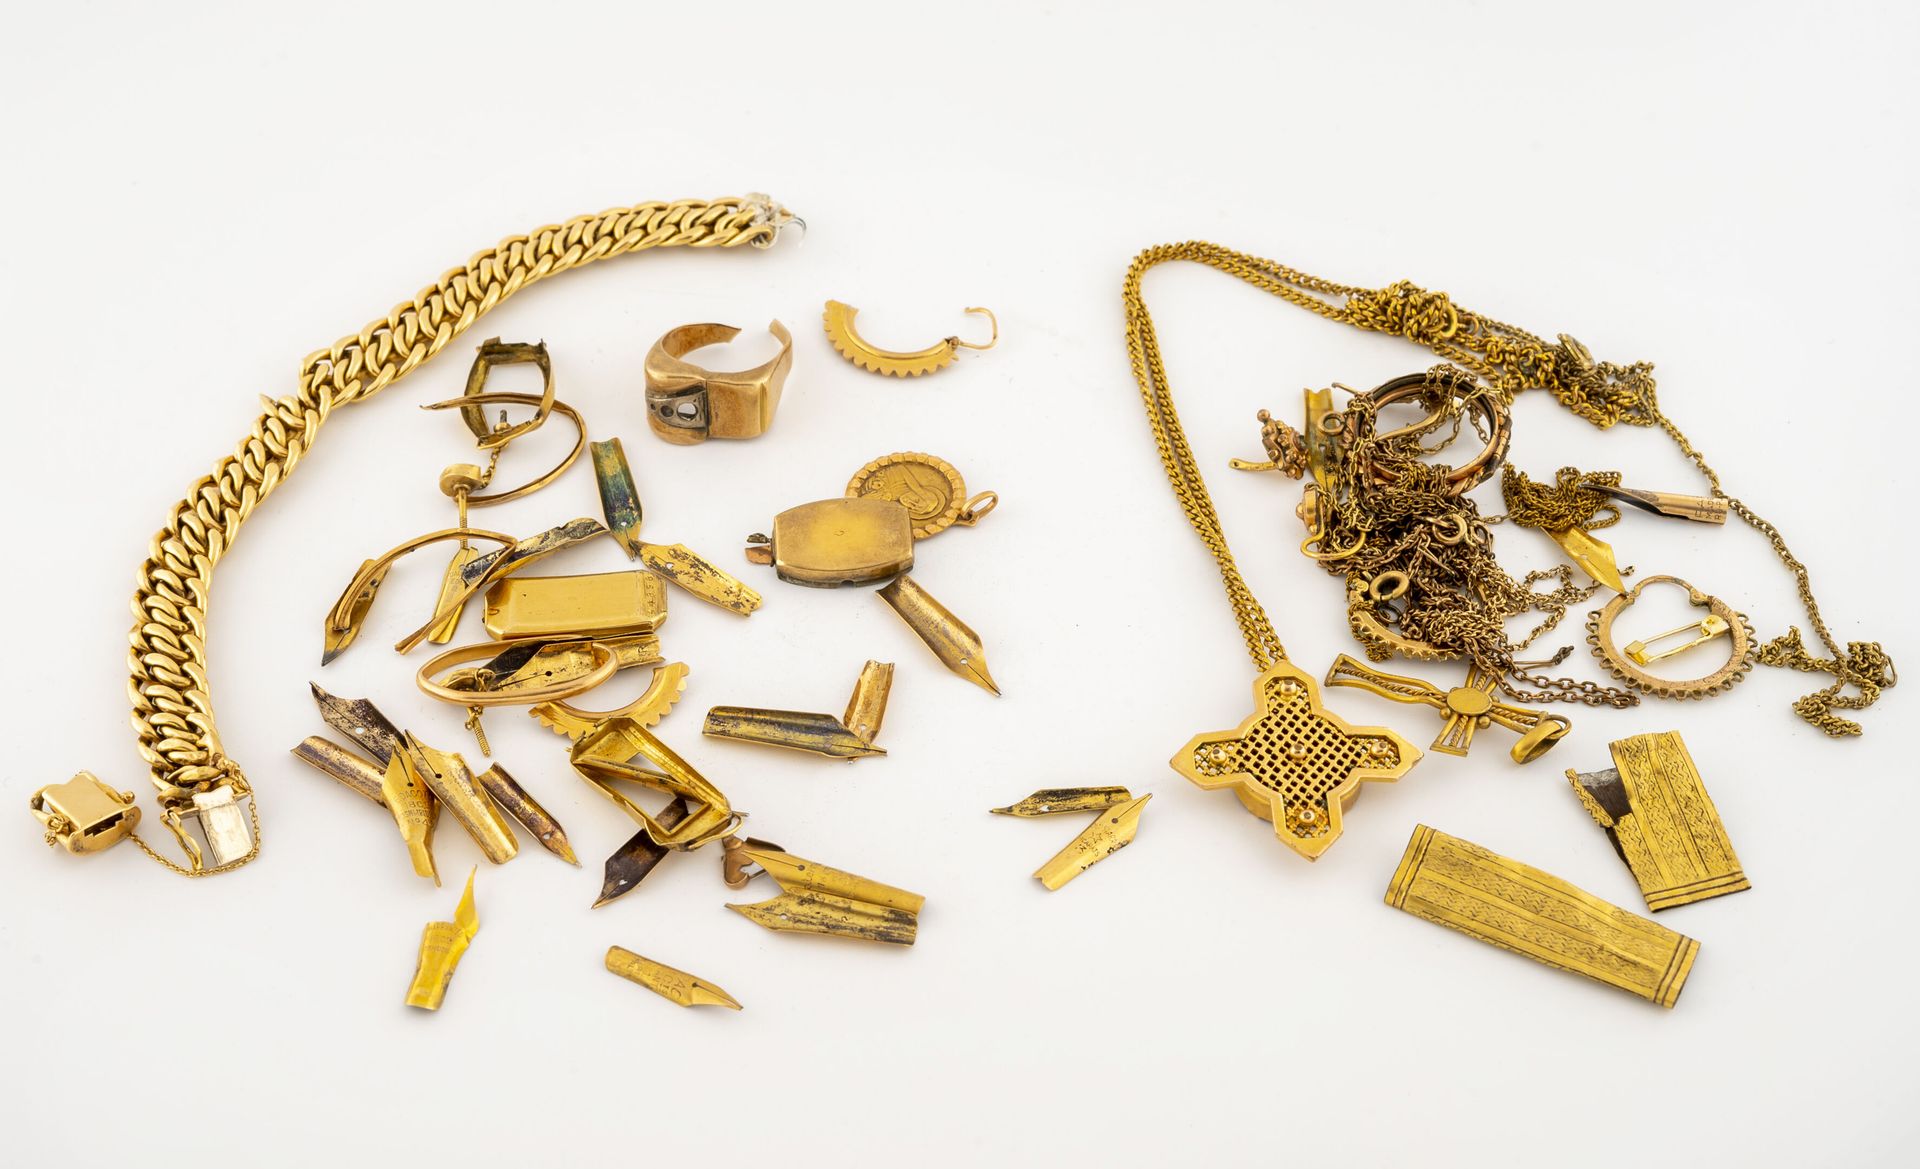 Null 一批黄金碎片（Min.585），包括笔尖、手镯...

总重量：45.5克。

ON JOINT :

大量的各种金属珠宝，包括项链、手链...

磨&hellip;